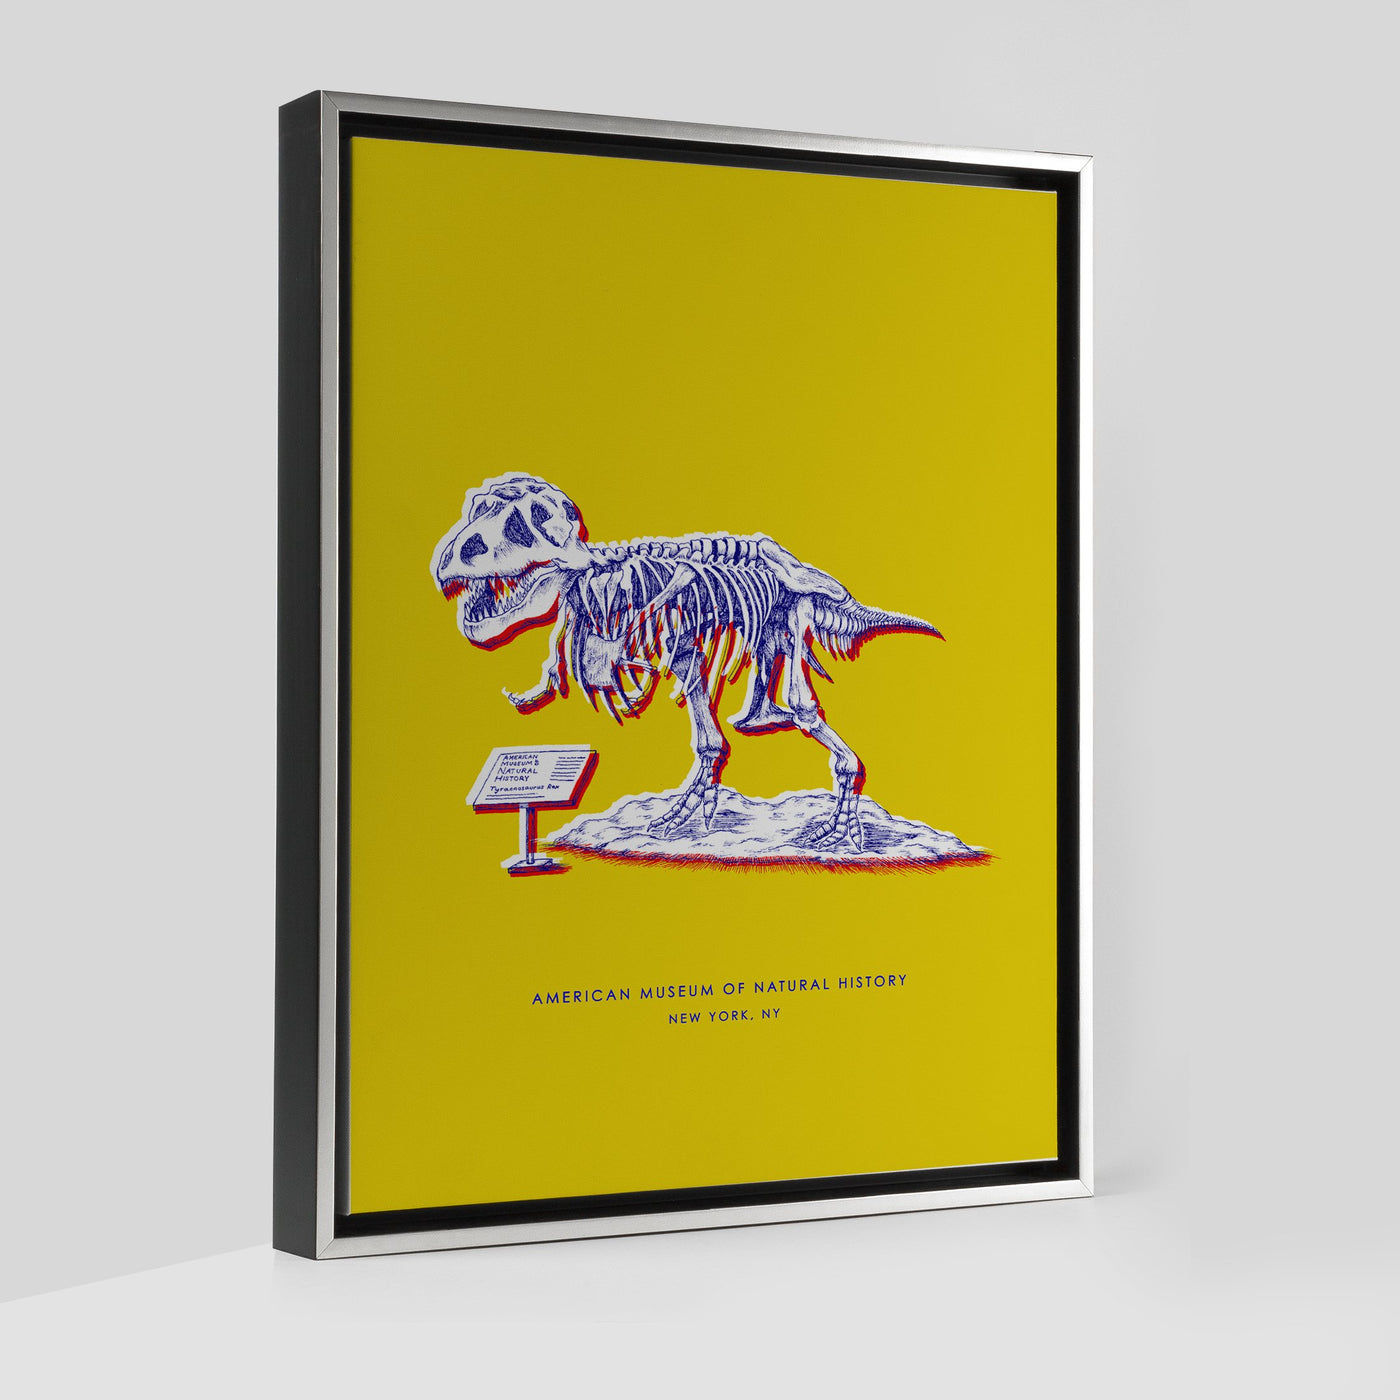 Gallery Prints Yellow Canvas / 8x10 / Silver New York Dinosaur Print Katie Kime